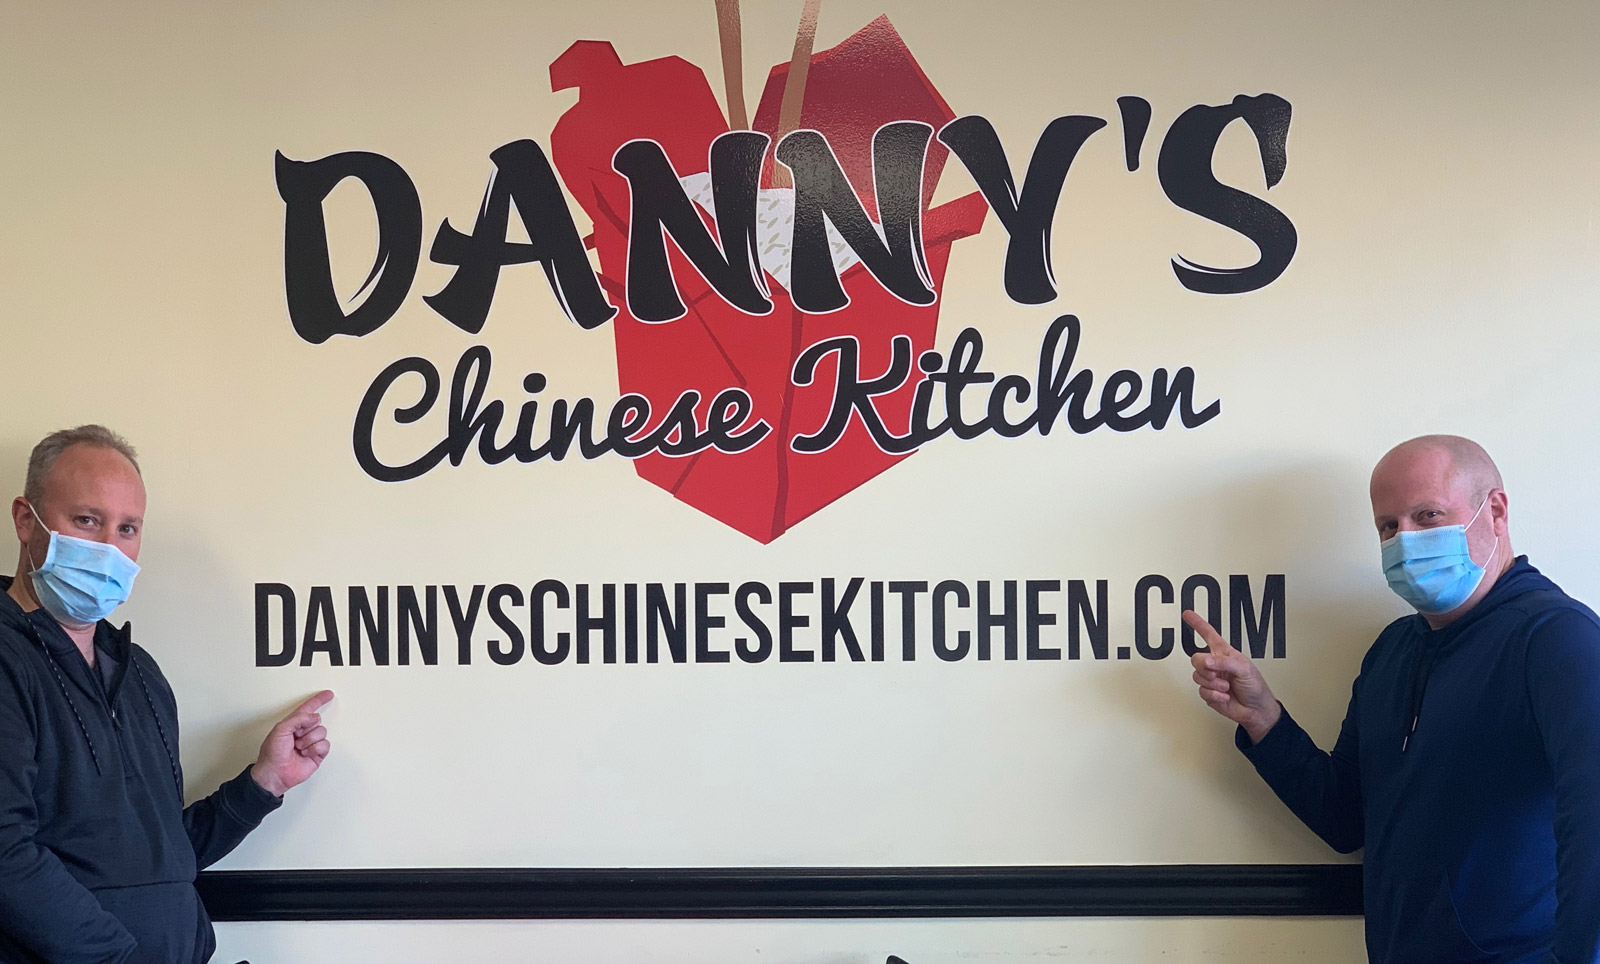 Dannys chinese kitchen